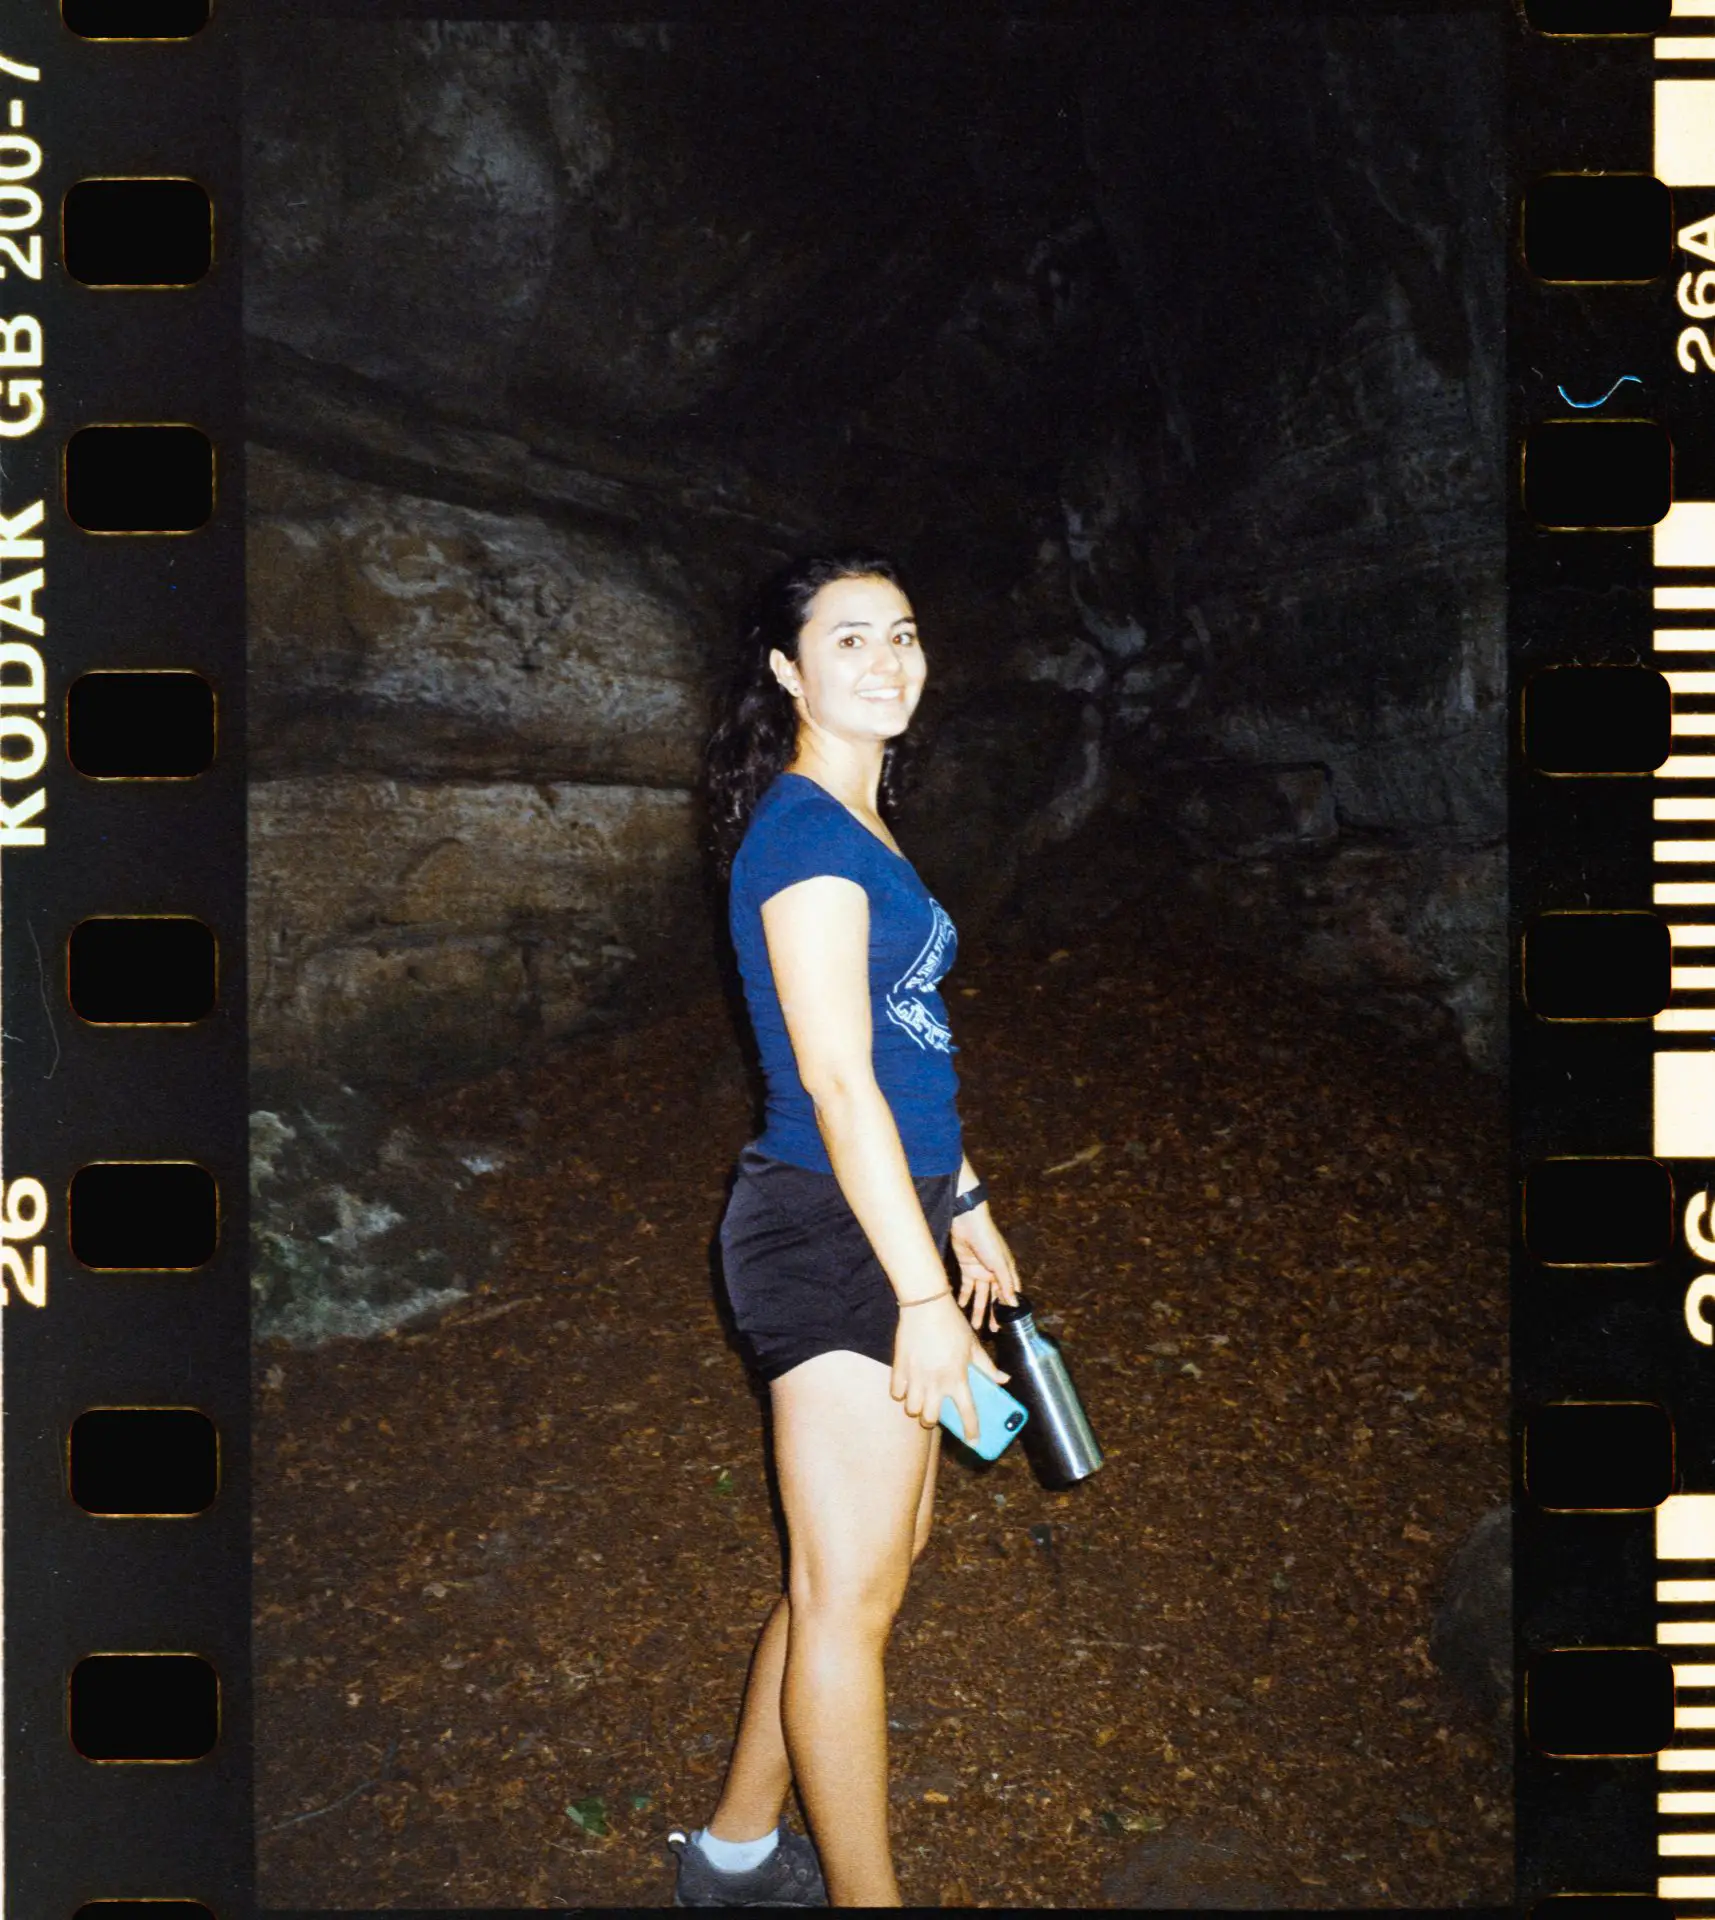 Flash portrait among natural rock caves